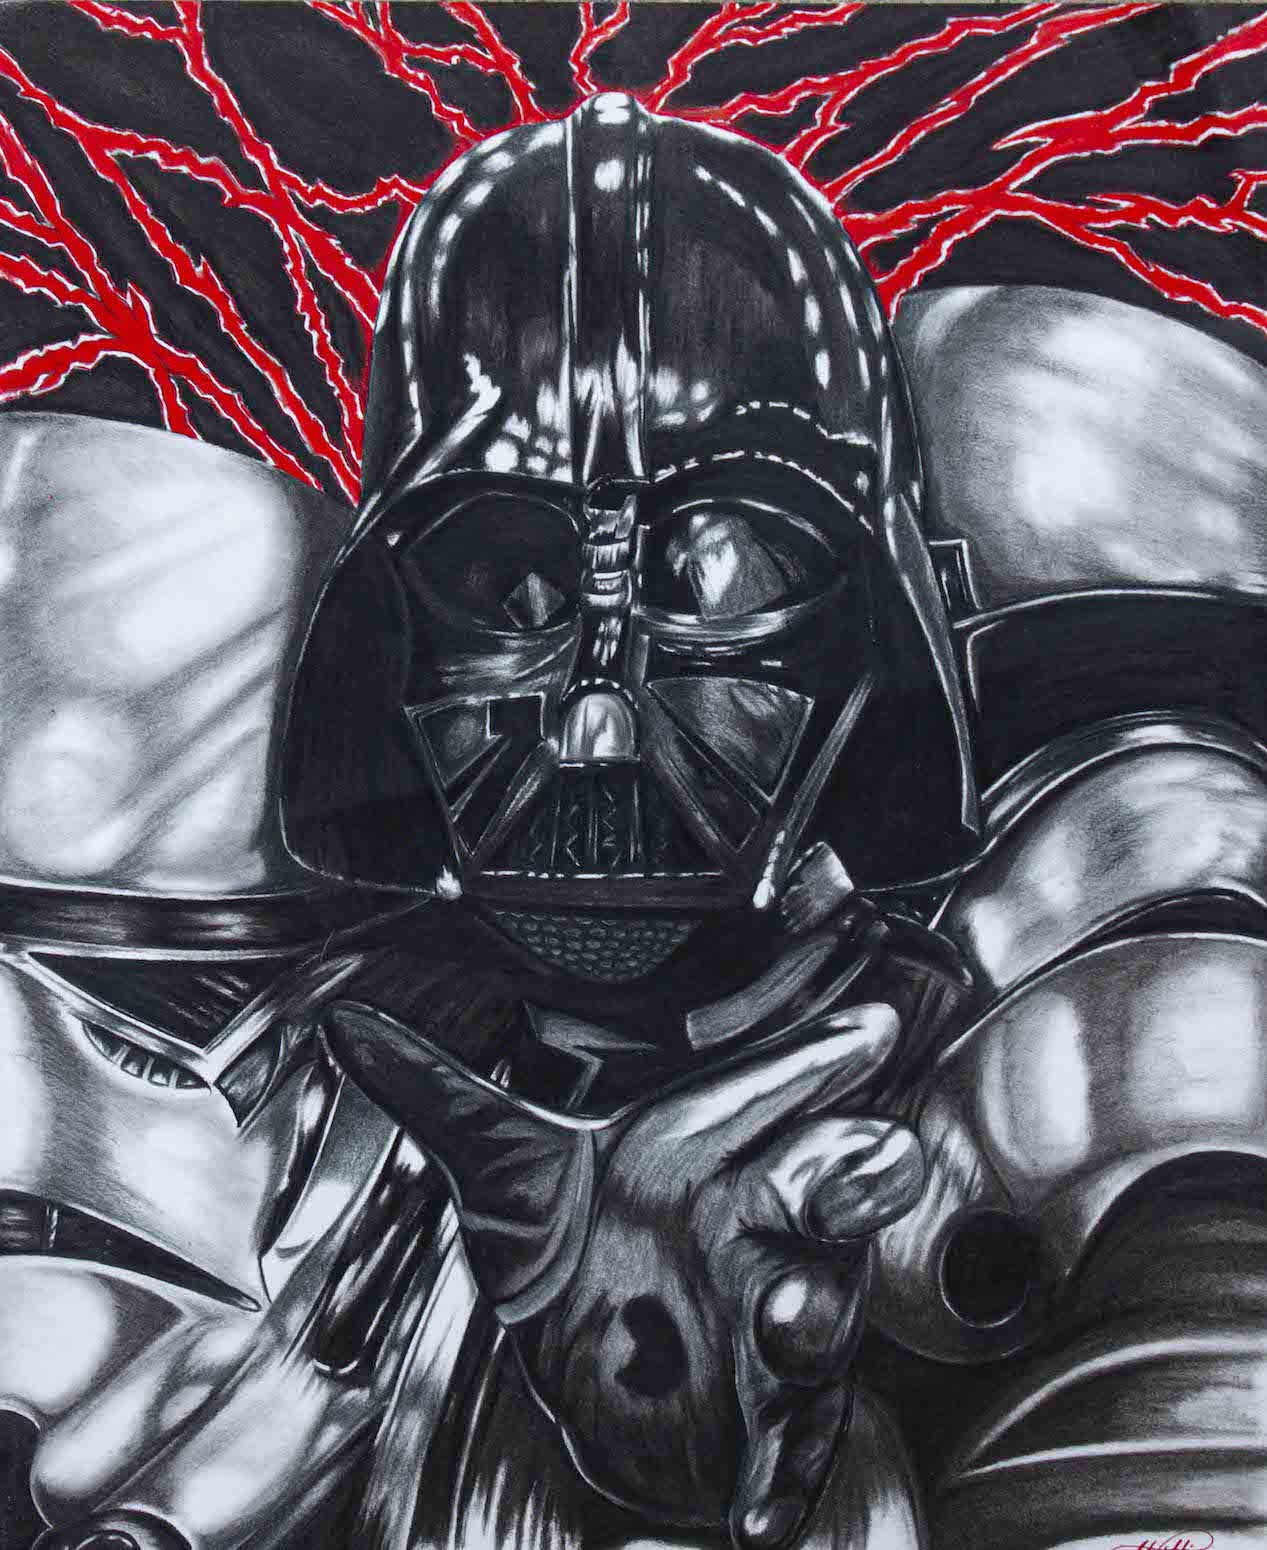 "The dark force" prison art original art Joshua Willis 